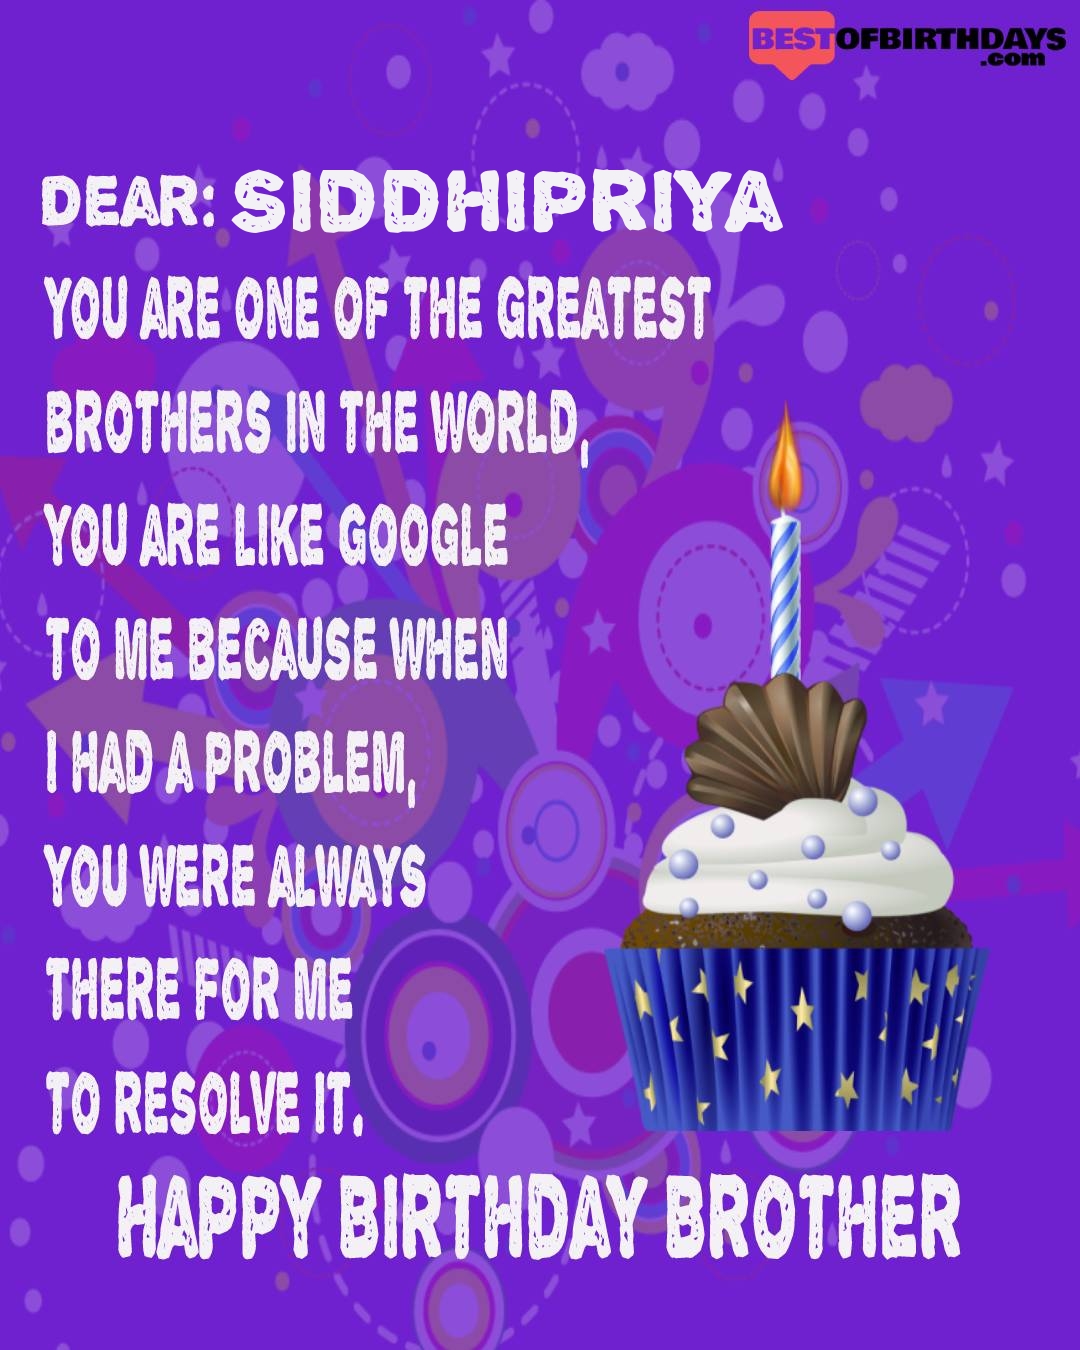 Happy birthday siddhipriya bhai brother bro